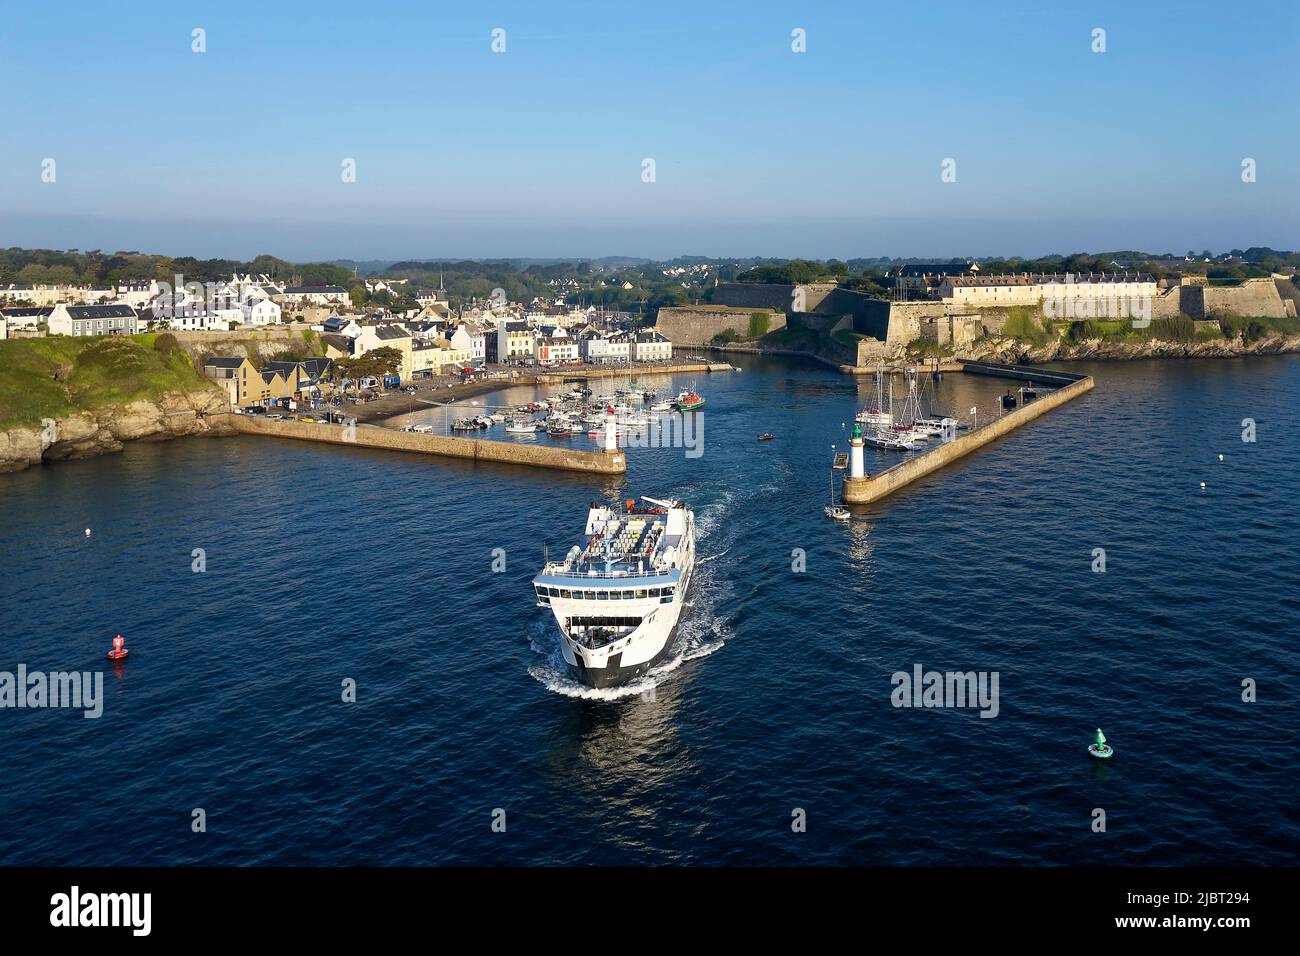 France, Morbihan, Belle Ile en mer, Le Palais, the ferry leaves the port, Vauban Citadel (aerial view) Stock Photo